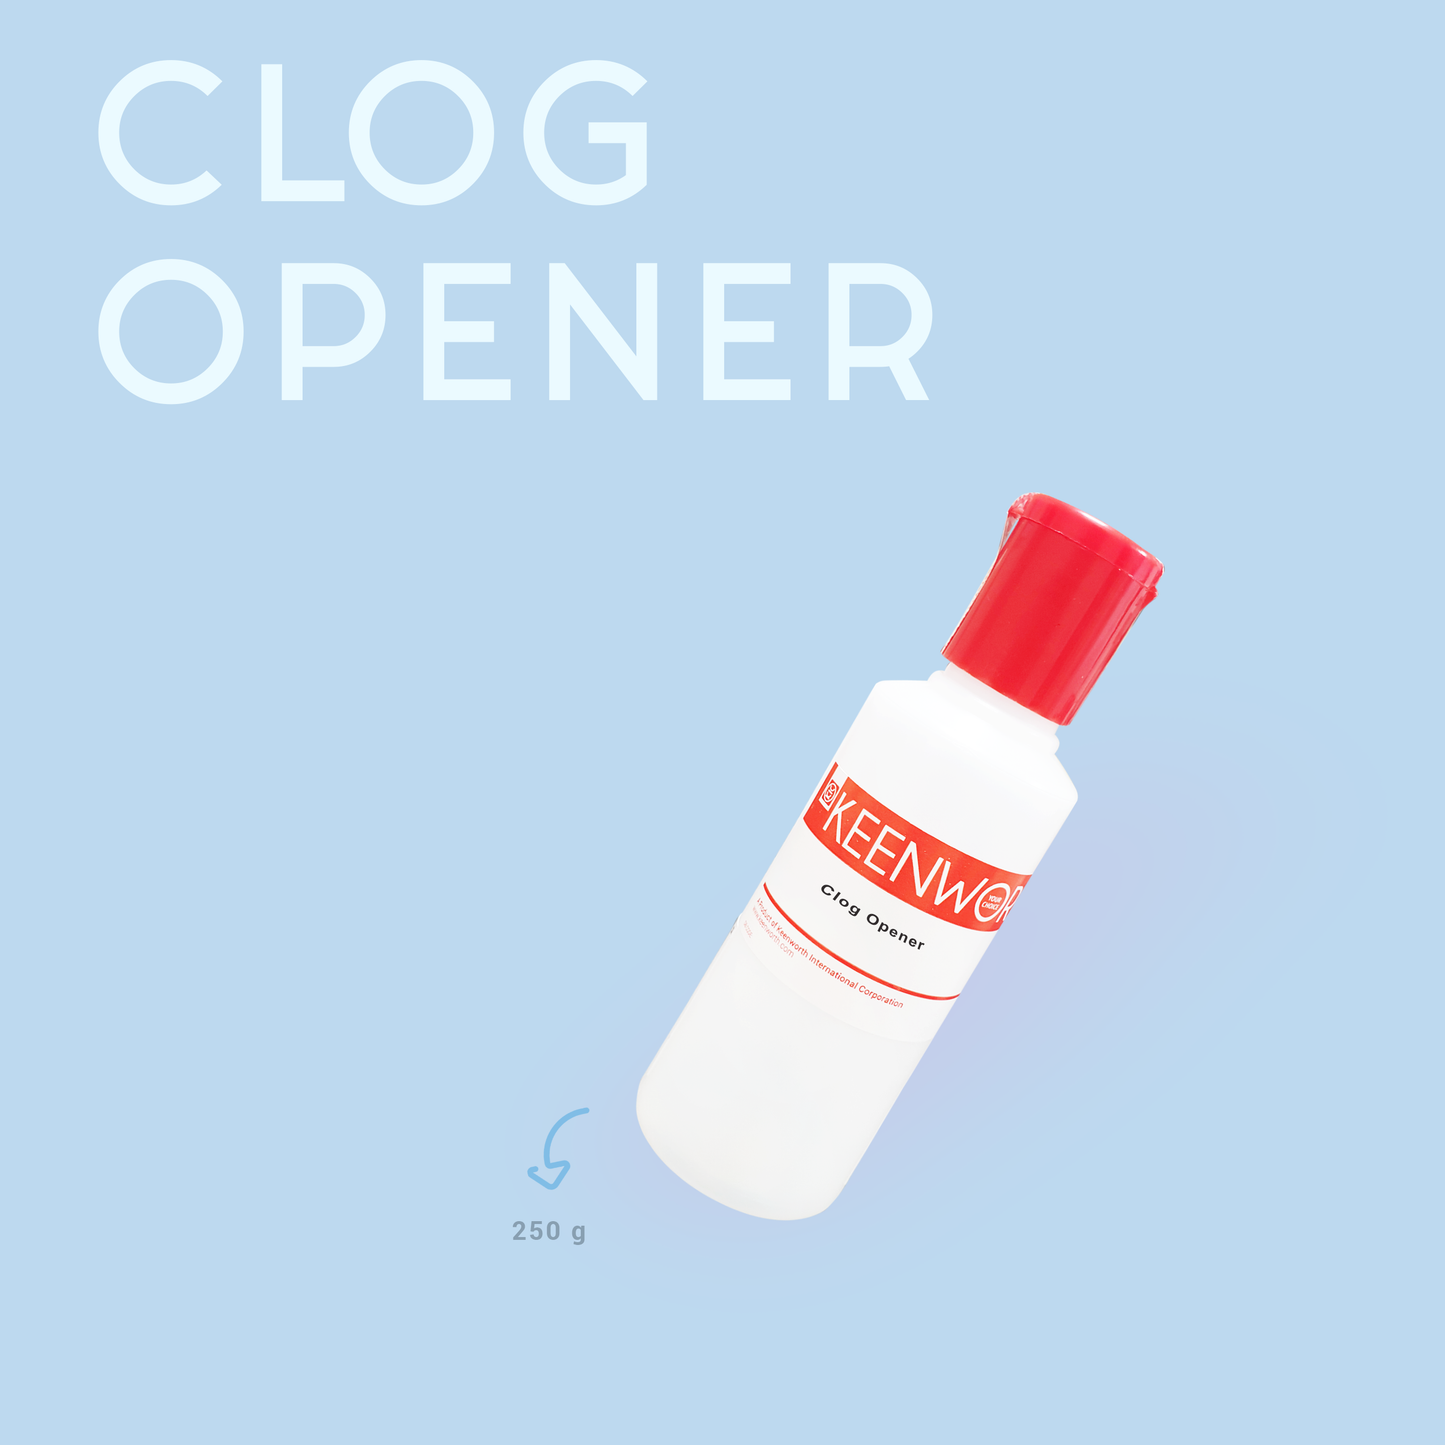 Clog Opener